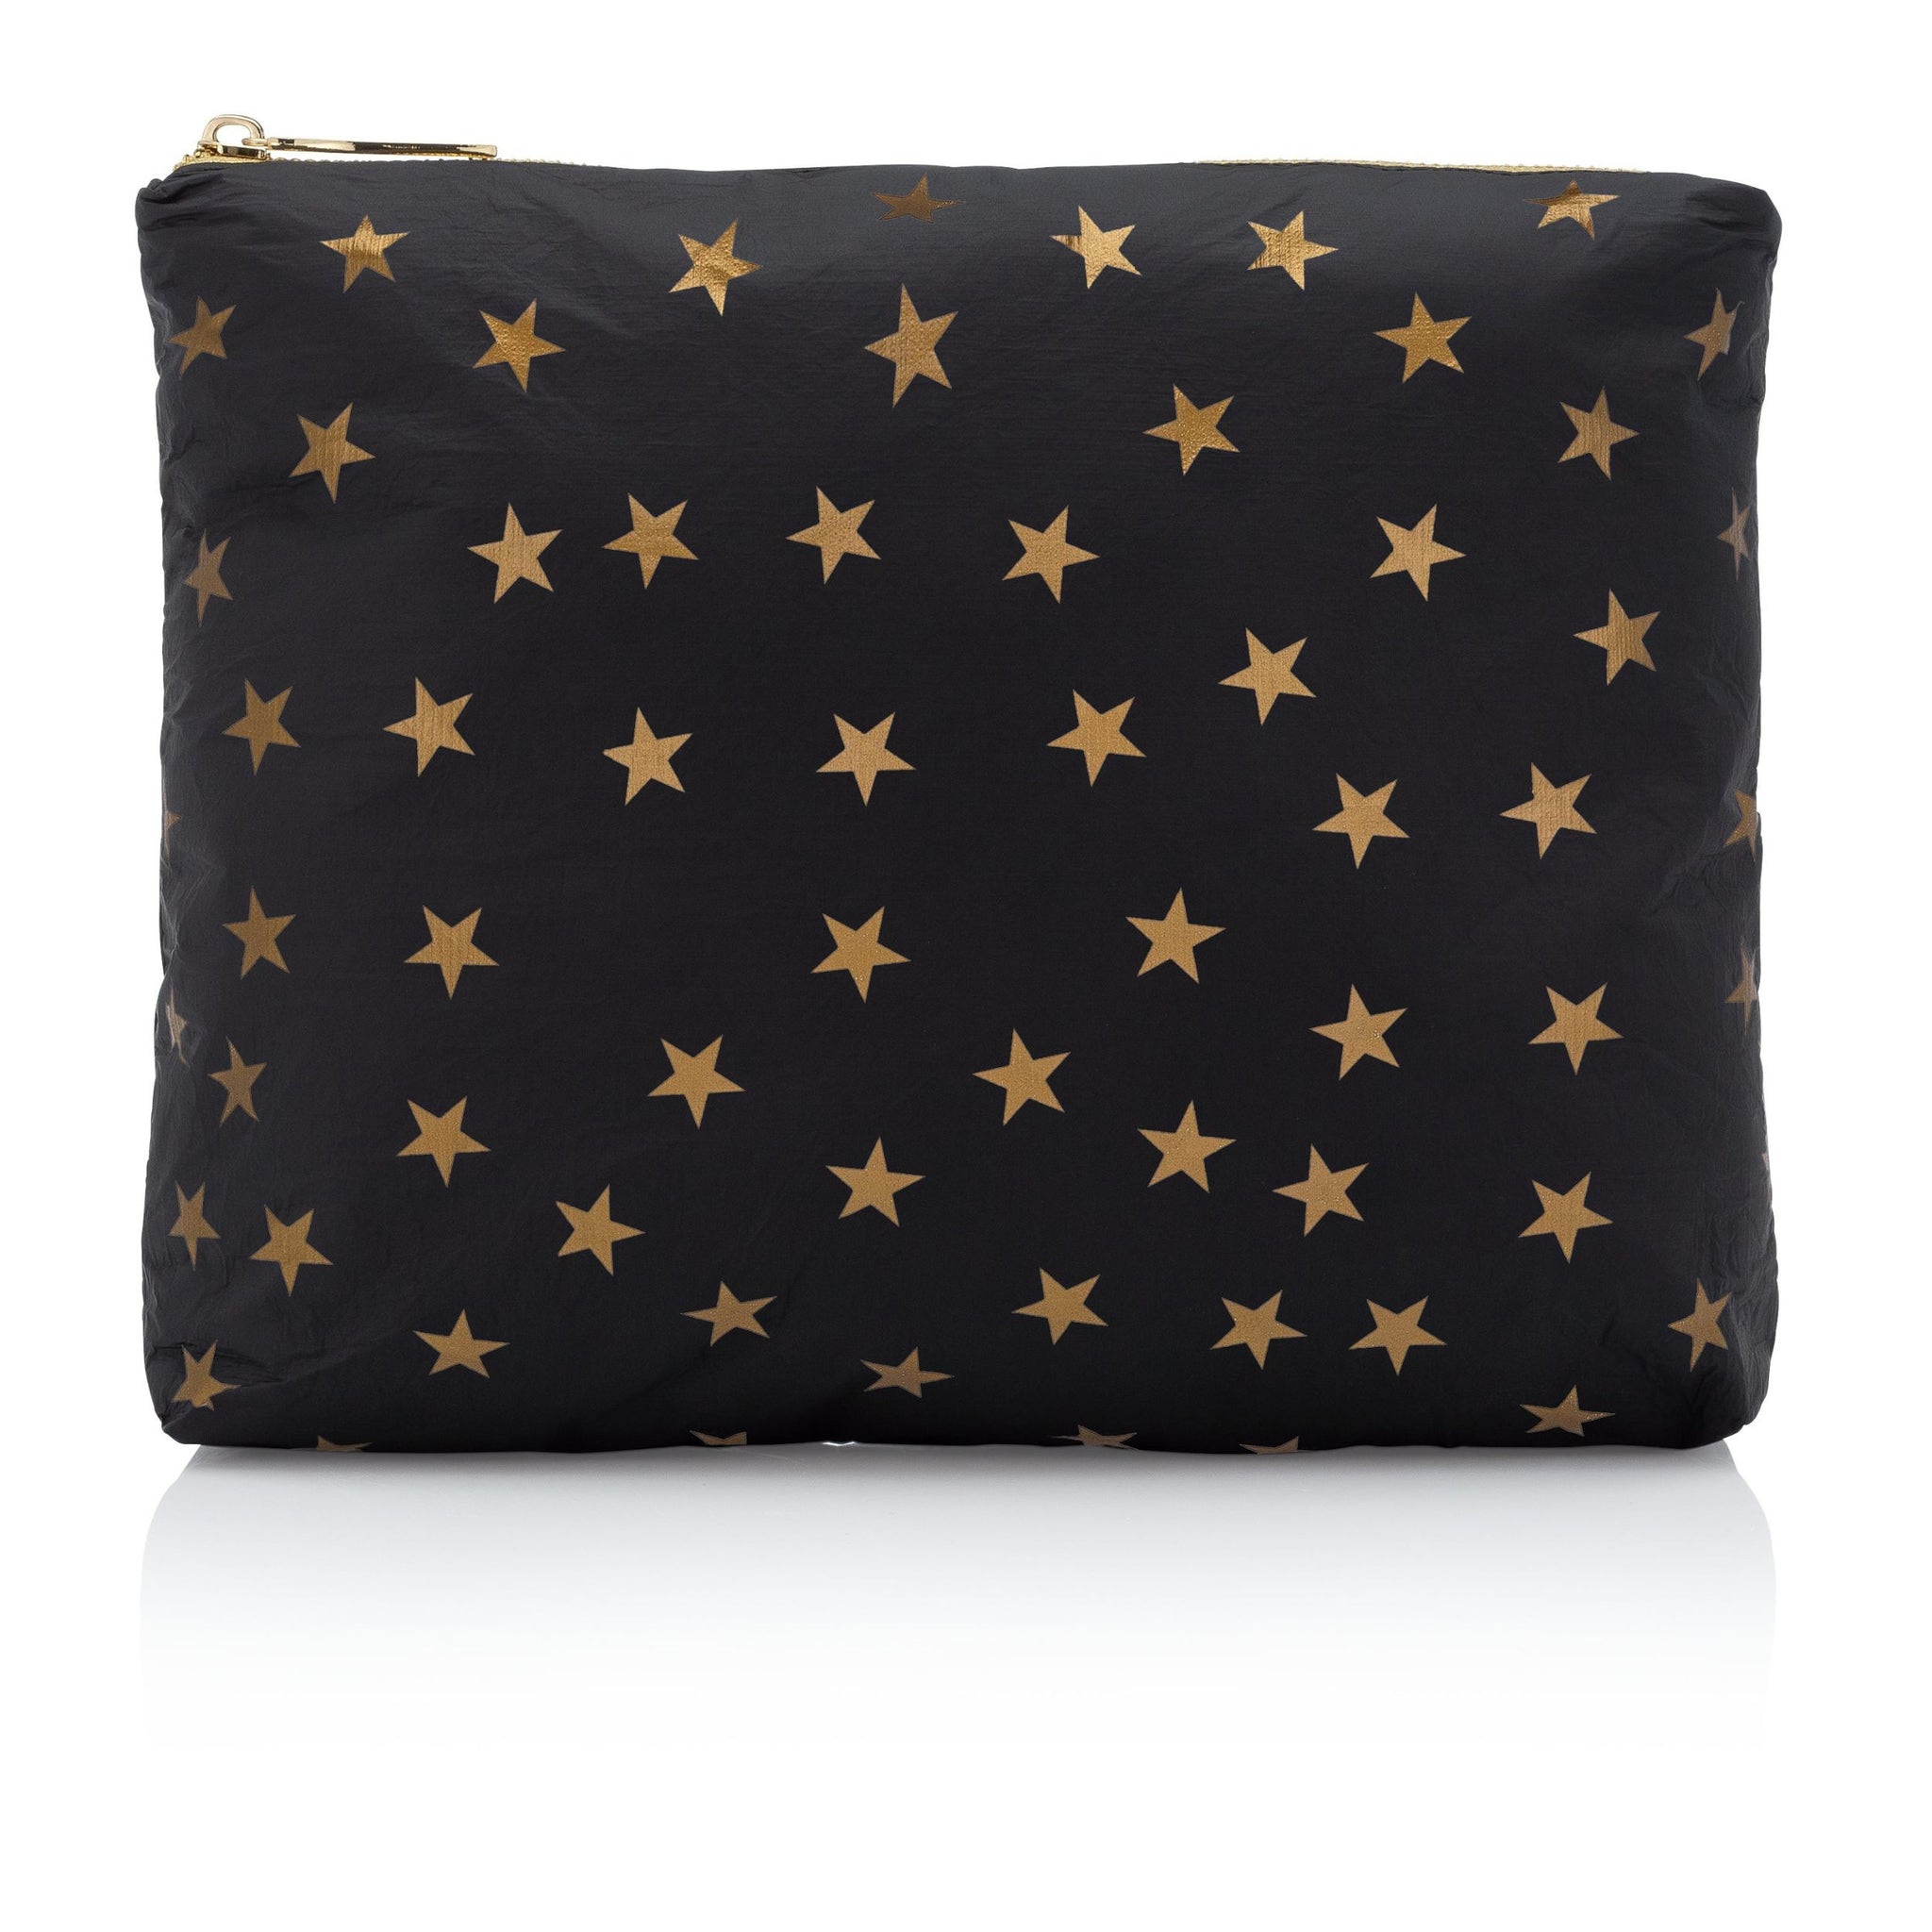 Medium Zipper Pack in Black with Myriad Gold Stars